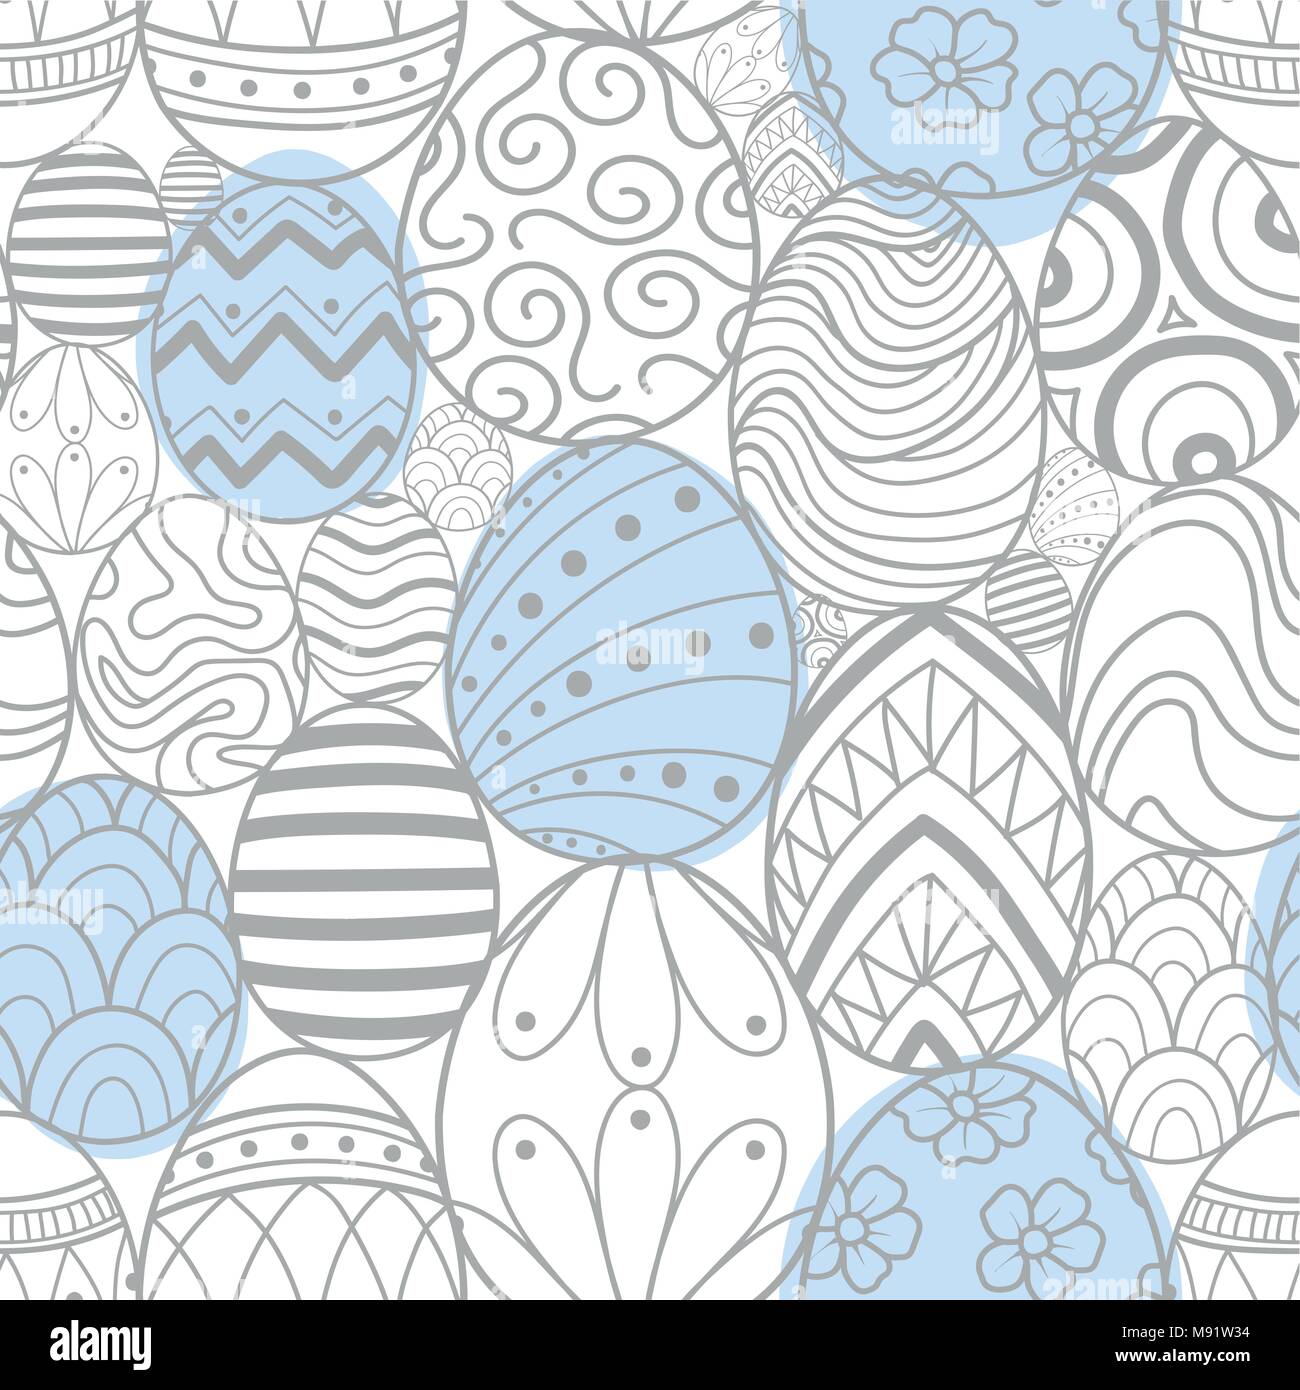 Easter eggs in light gray outline and blue plane random on white background. Cute hand drawn seamless pattern design for Easter festival in vector ill Stock Vector